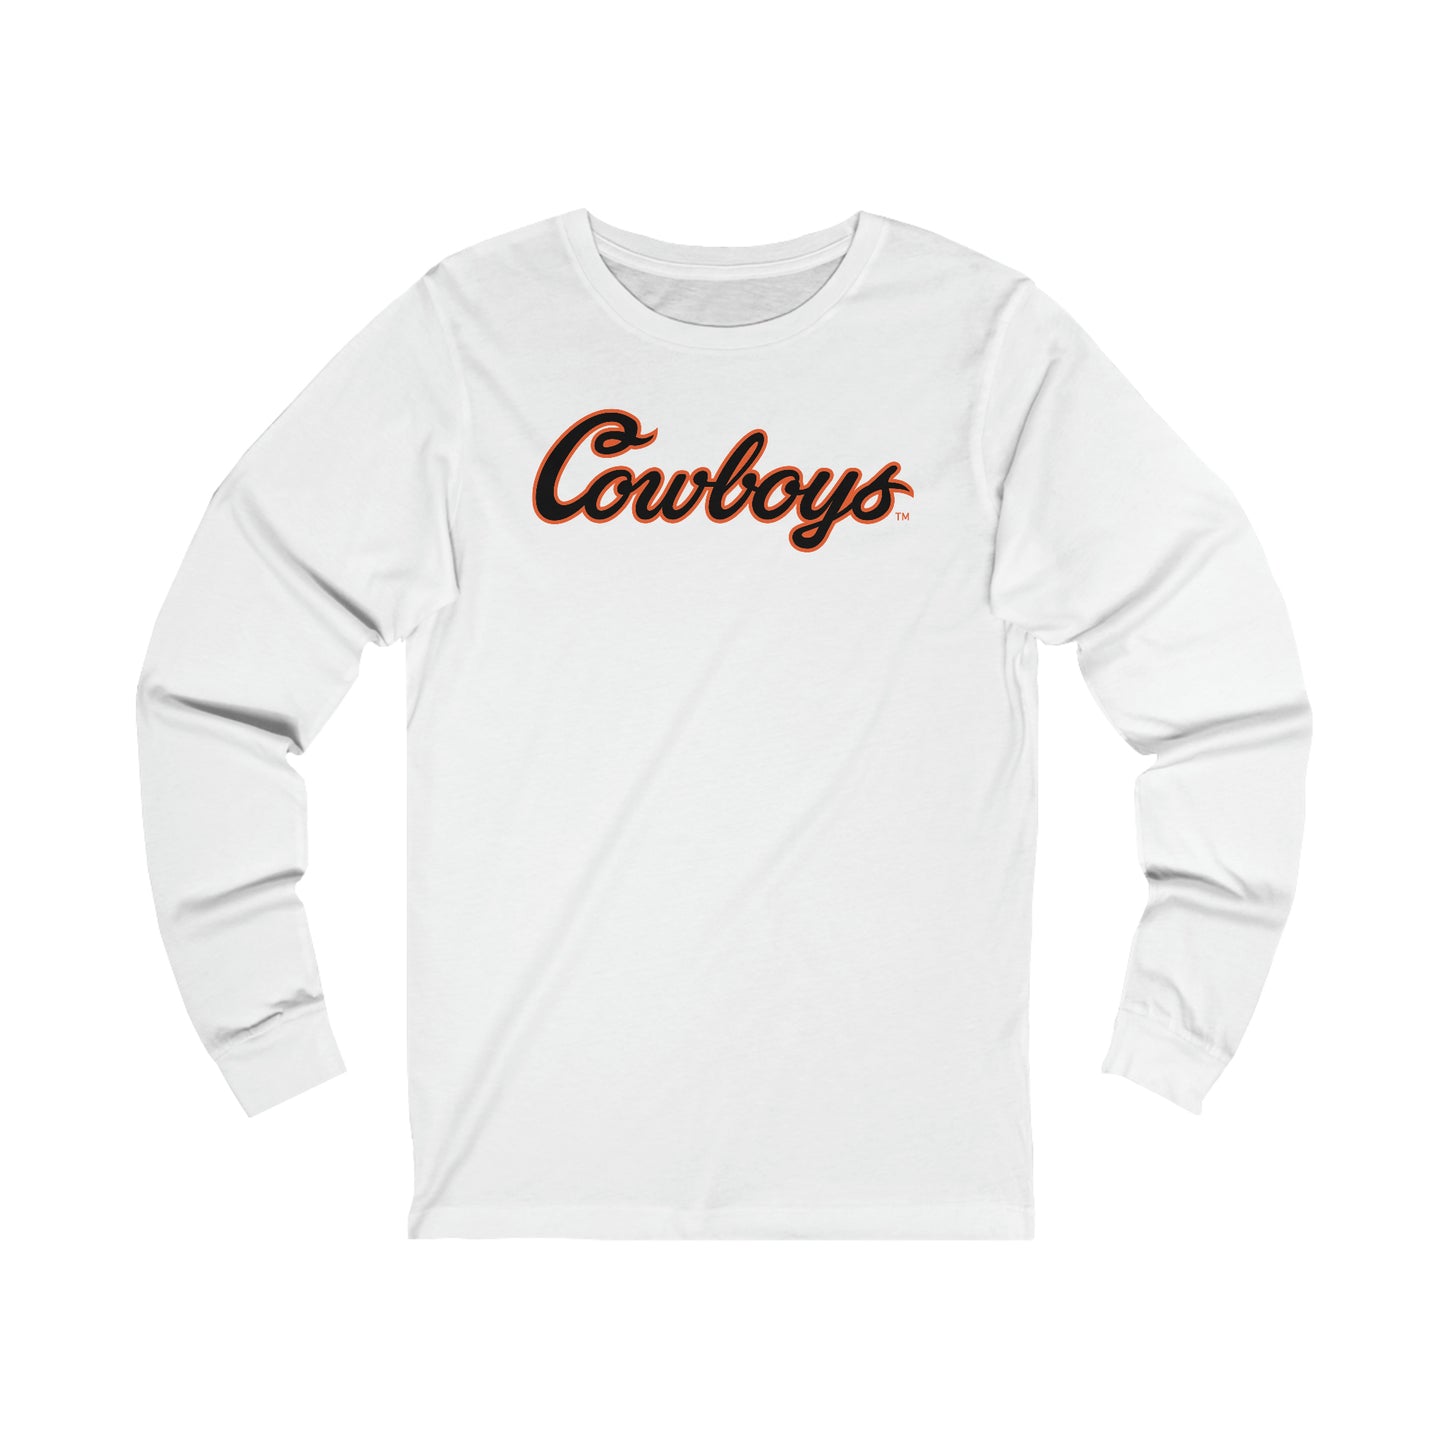 John-Michael Wright #51 Cursive Cowboys Long Sleeve T-Shirt